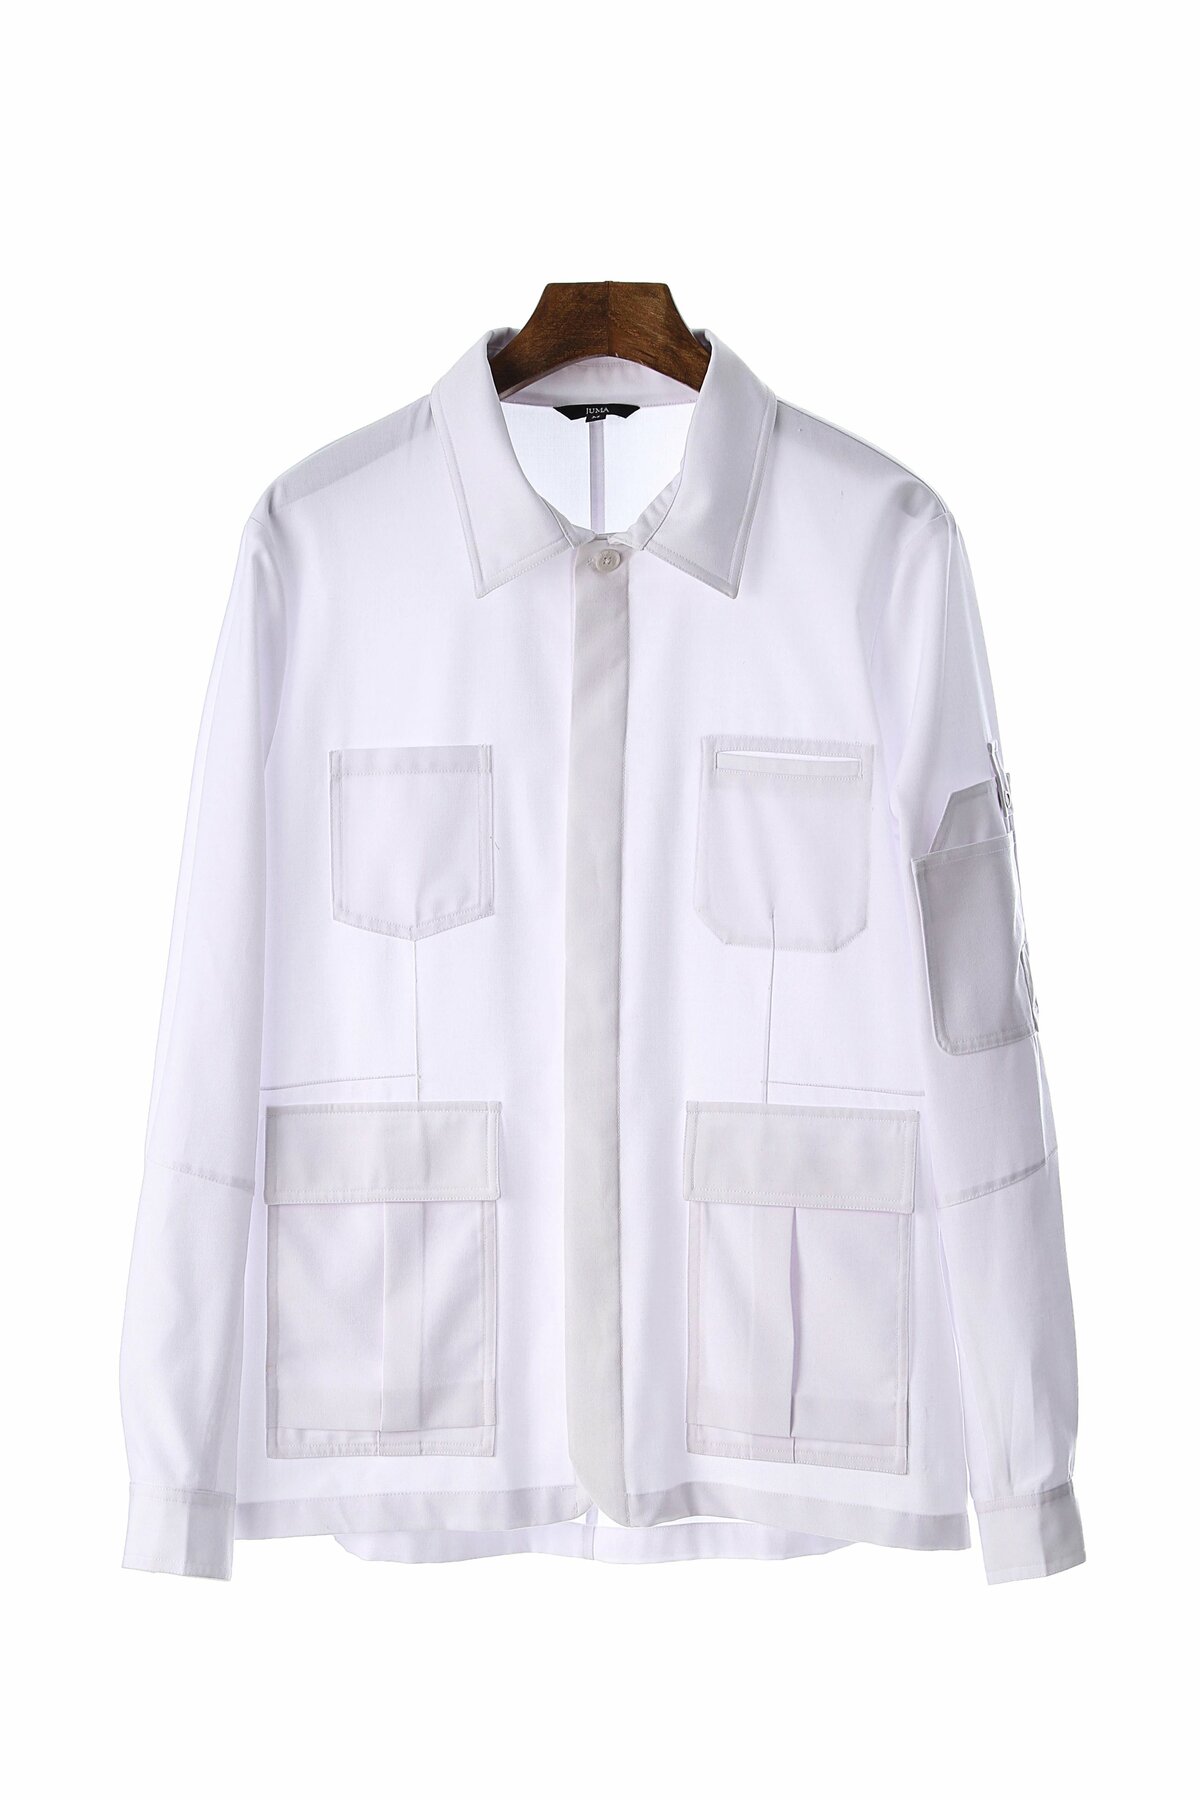 Zayu 短款夹克 - 8 个再生水瓶 - 白色｜Zayu Crop Jacket- 8 Recycled Water Bottles - White